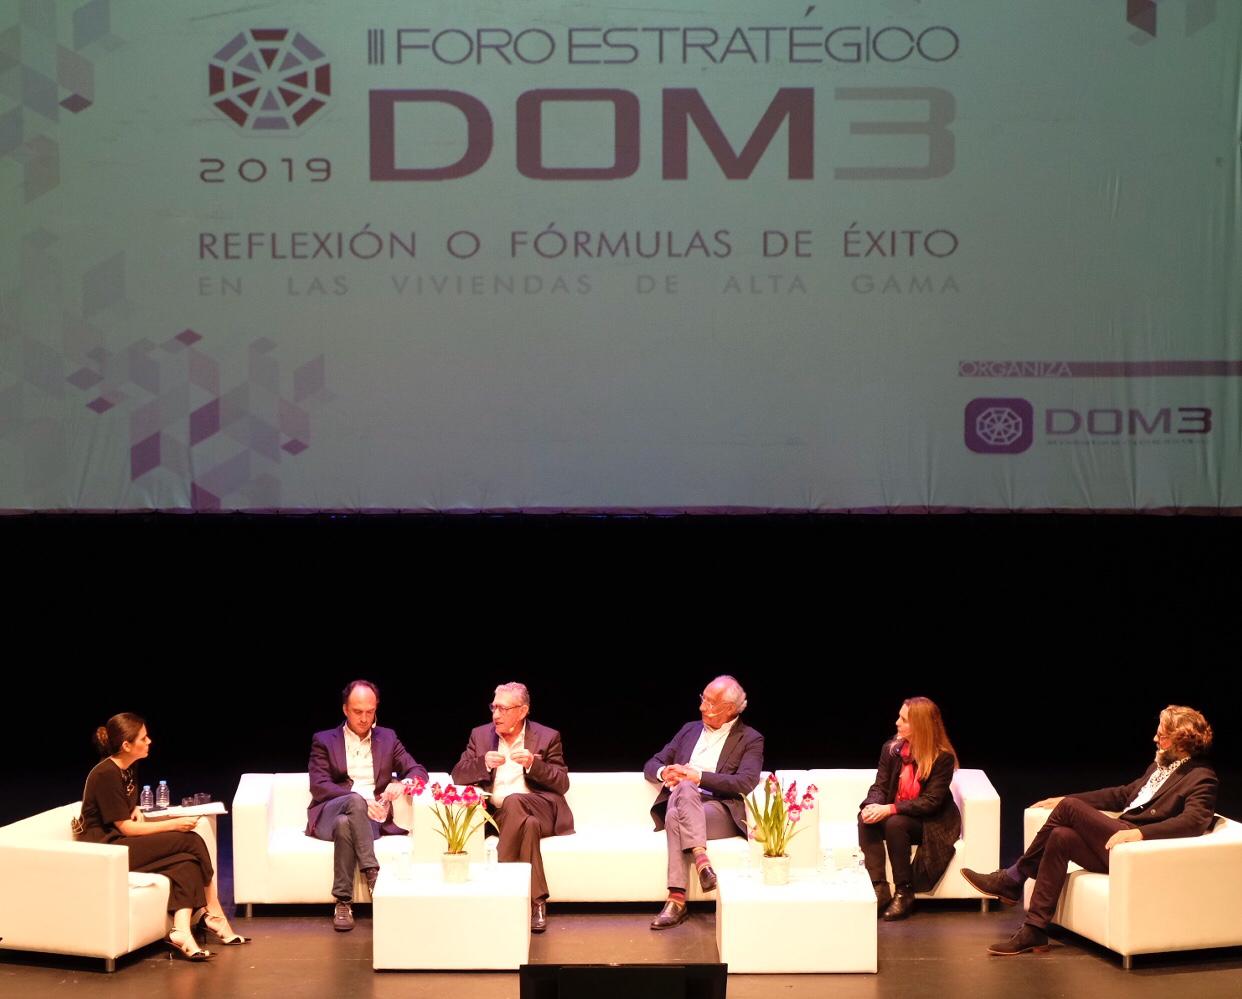 DOM3 Strategic Forum in Estepona